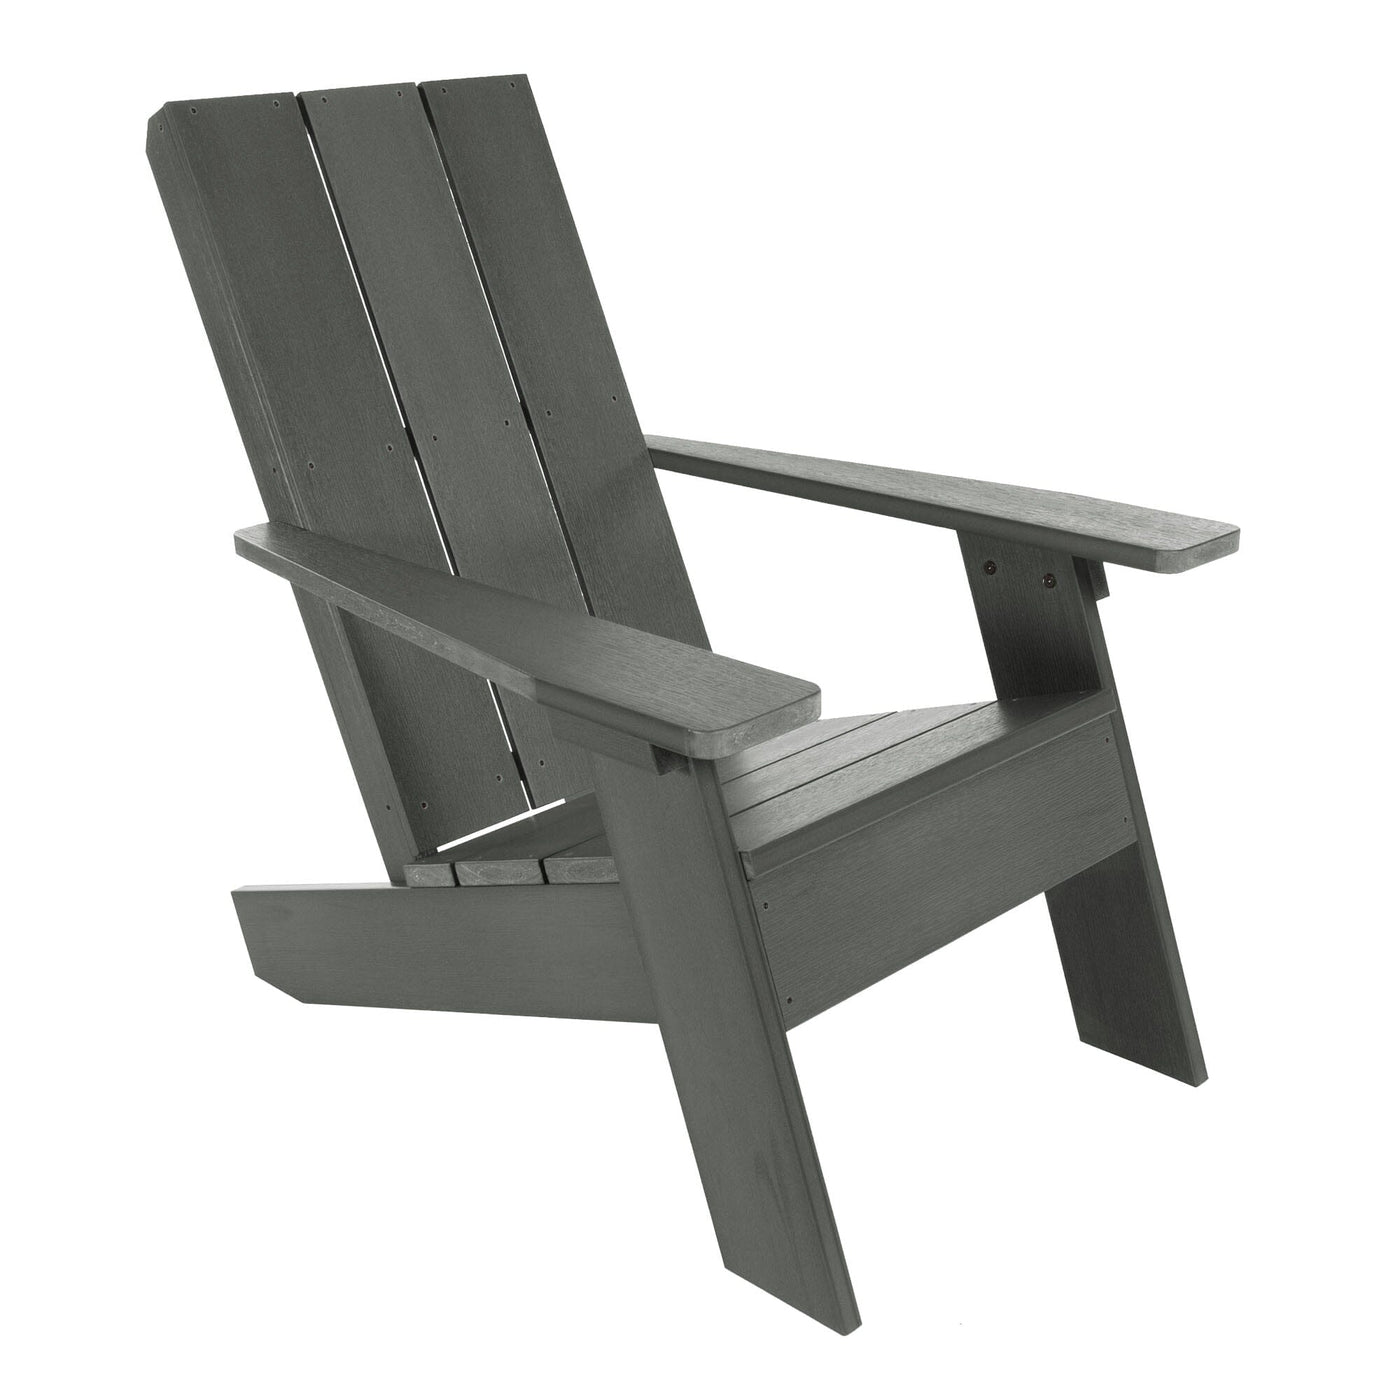 Italica Modern Adirondack Chair in Coastal Teak